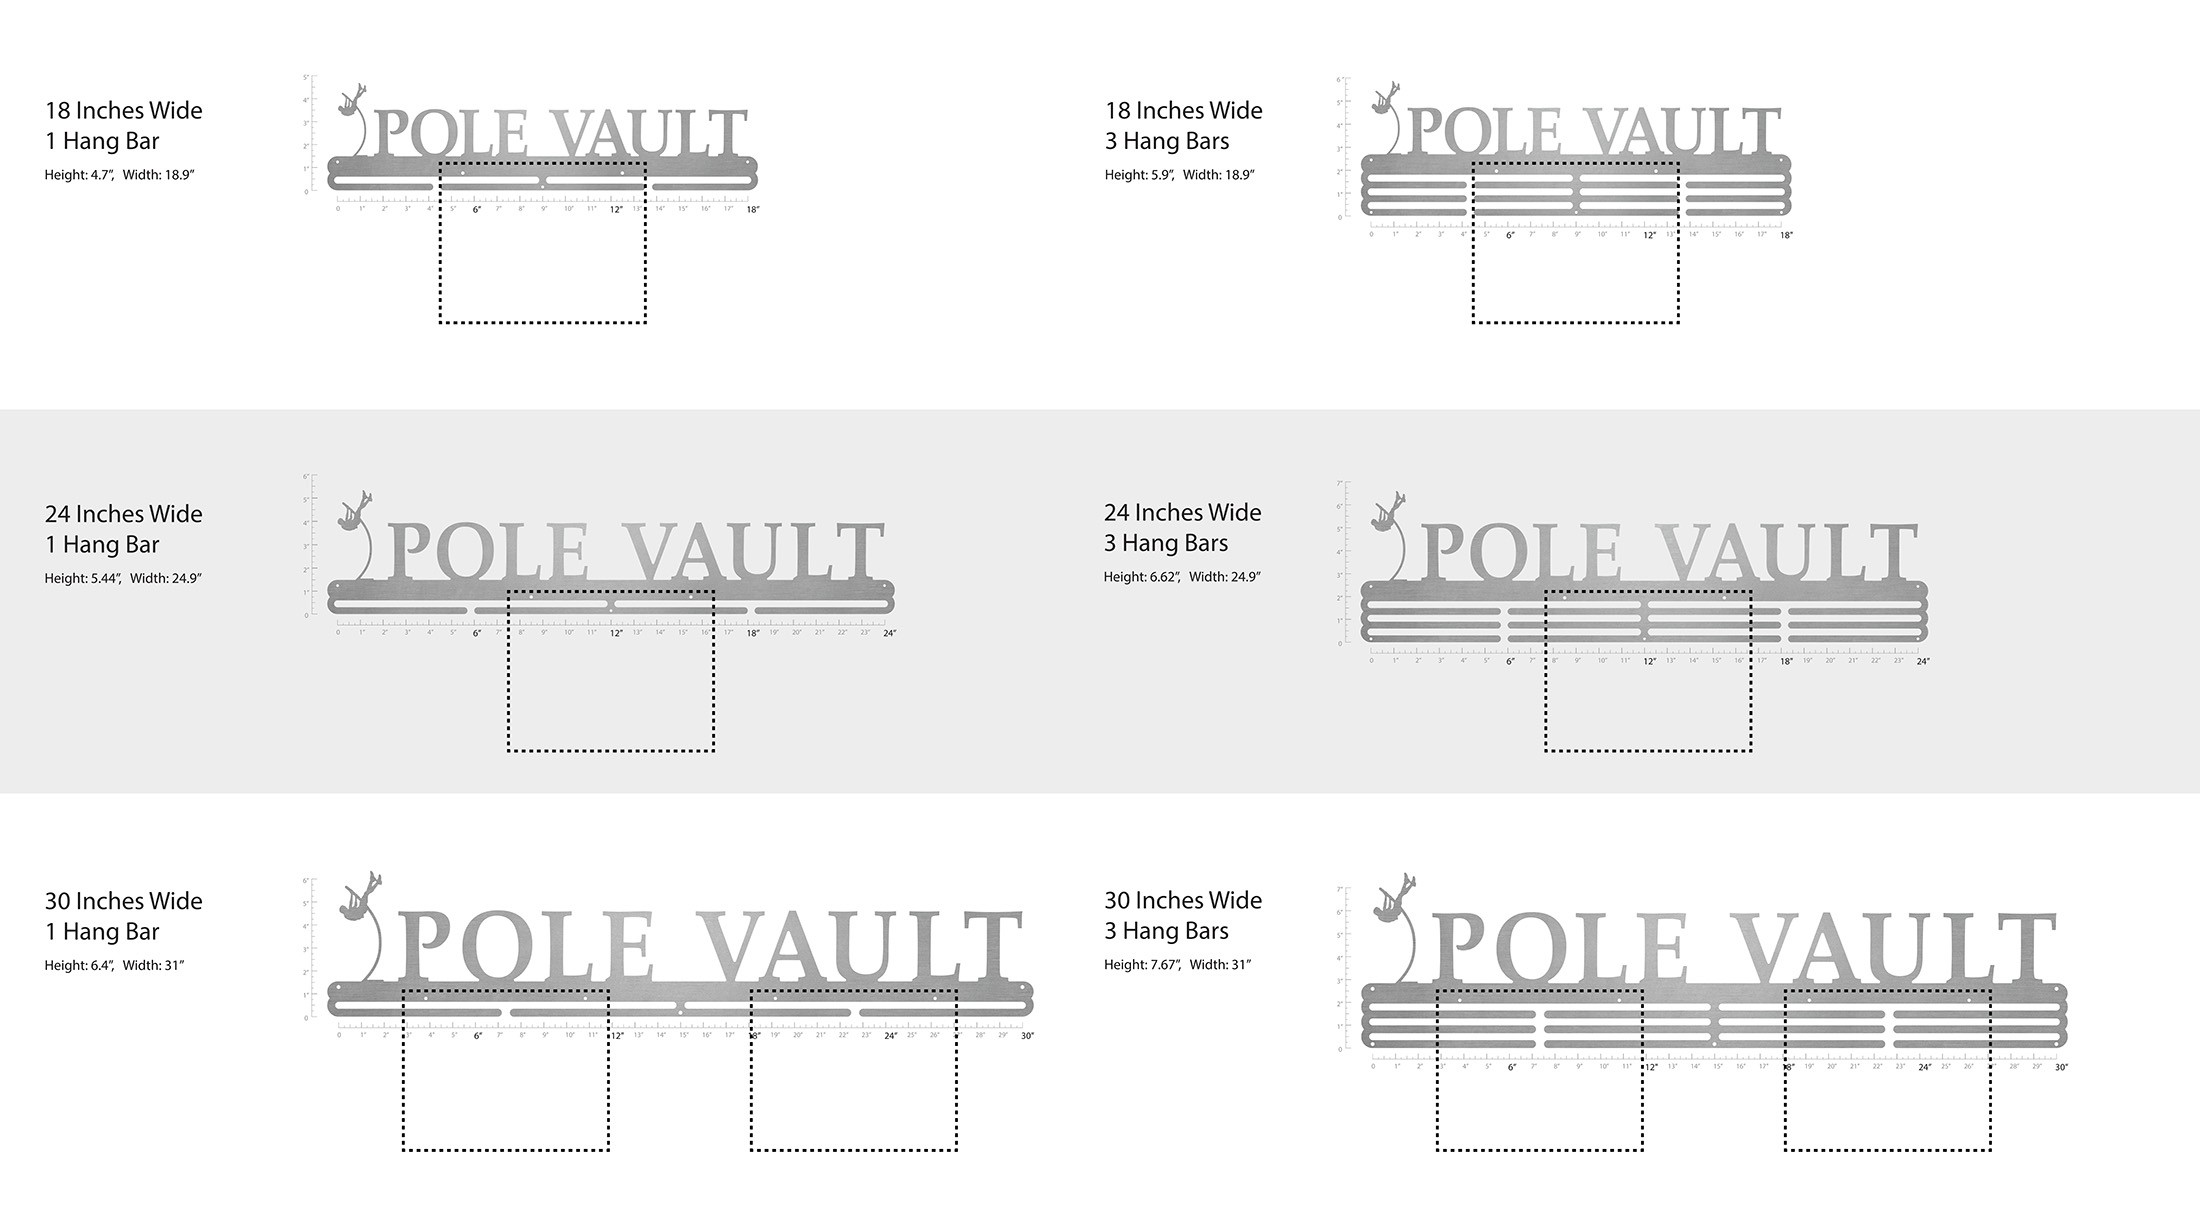 Pole Vault Bib and Medal Display - Male